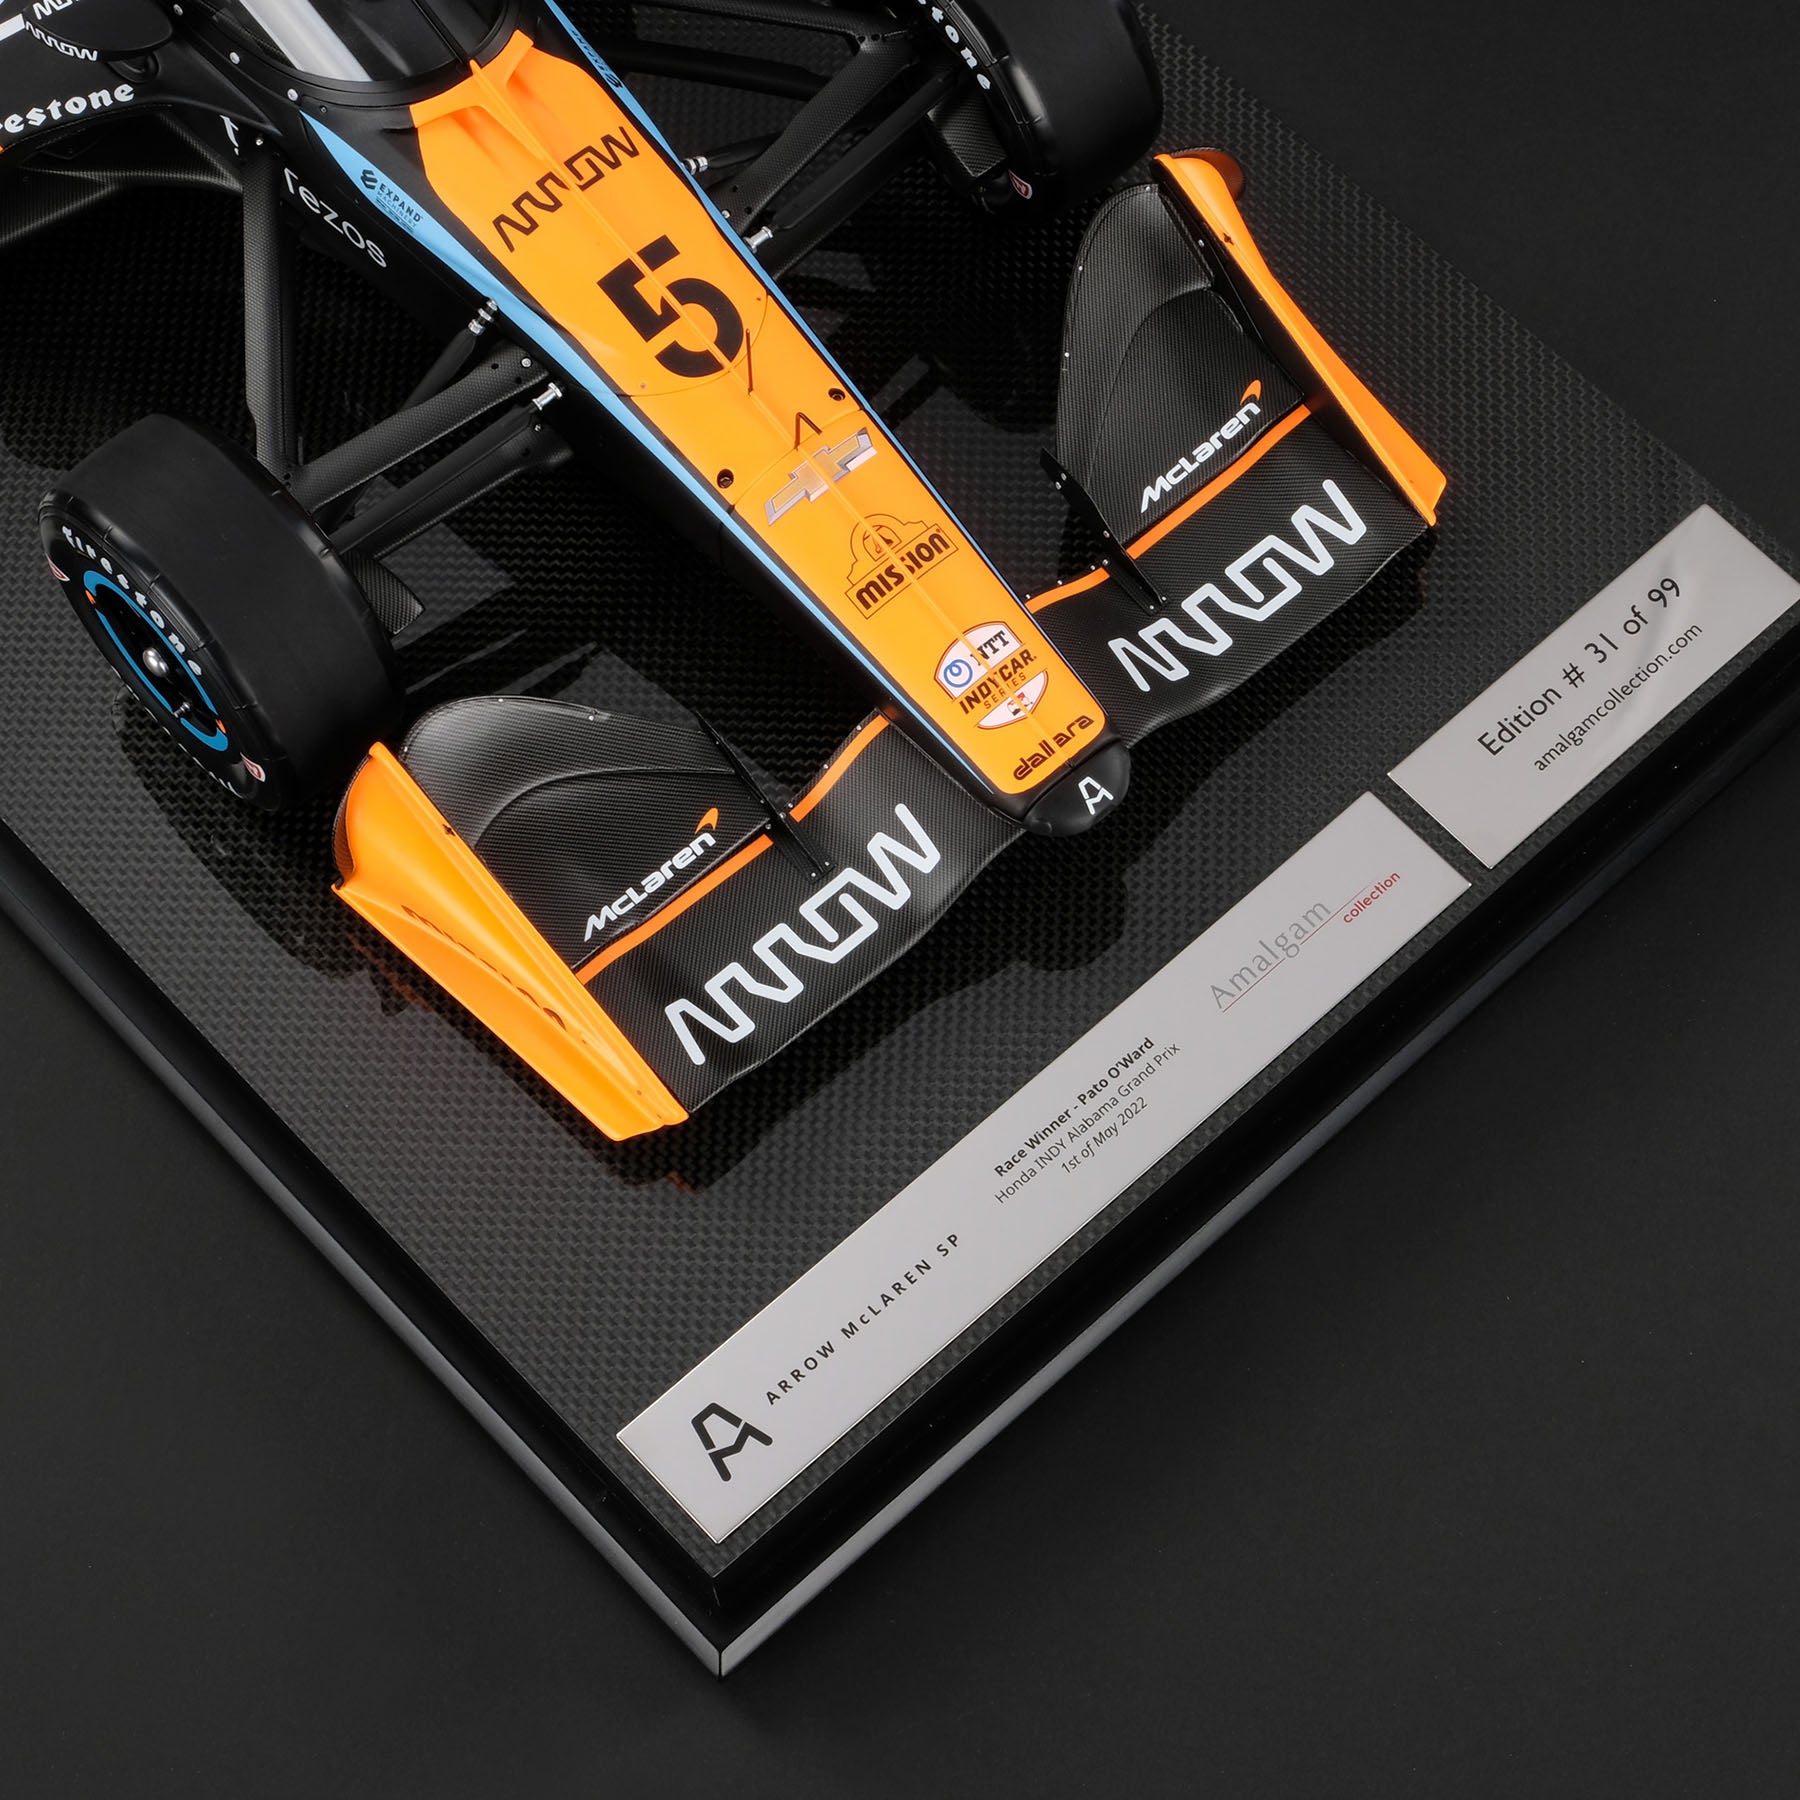 Arrow McLaren SP at 1:8 scale